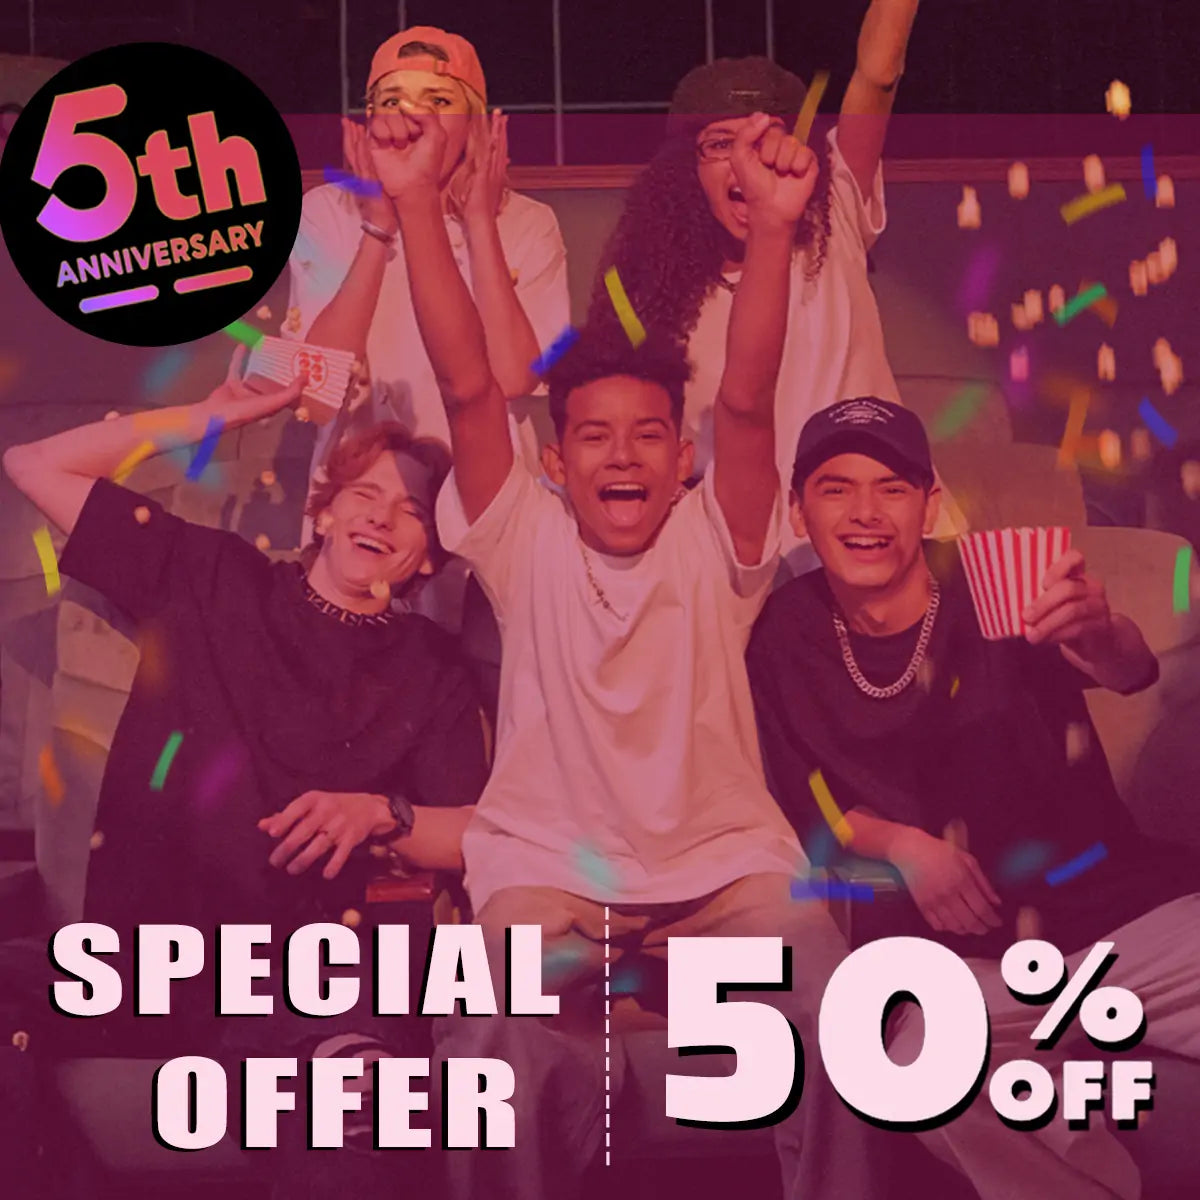 5th anniversary 50% off sale